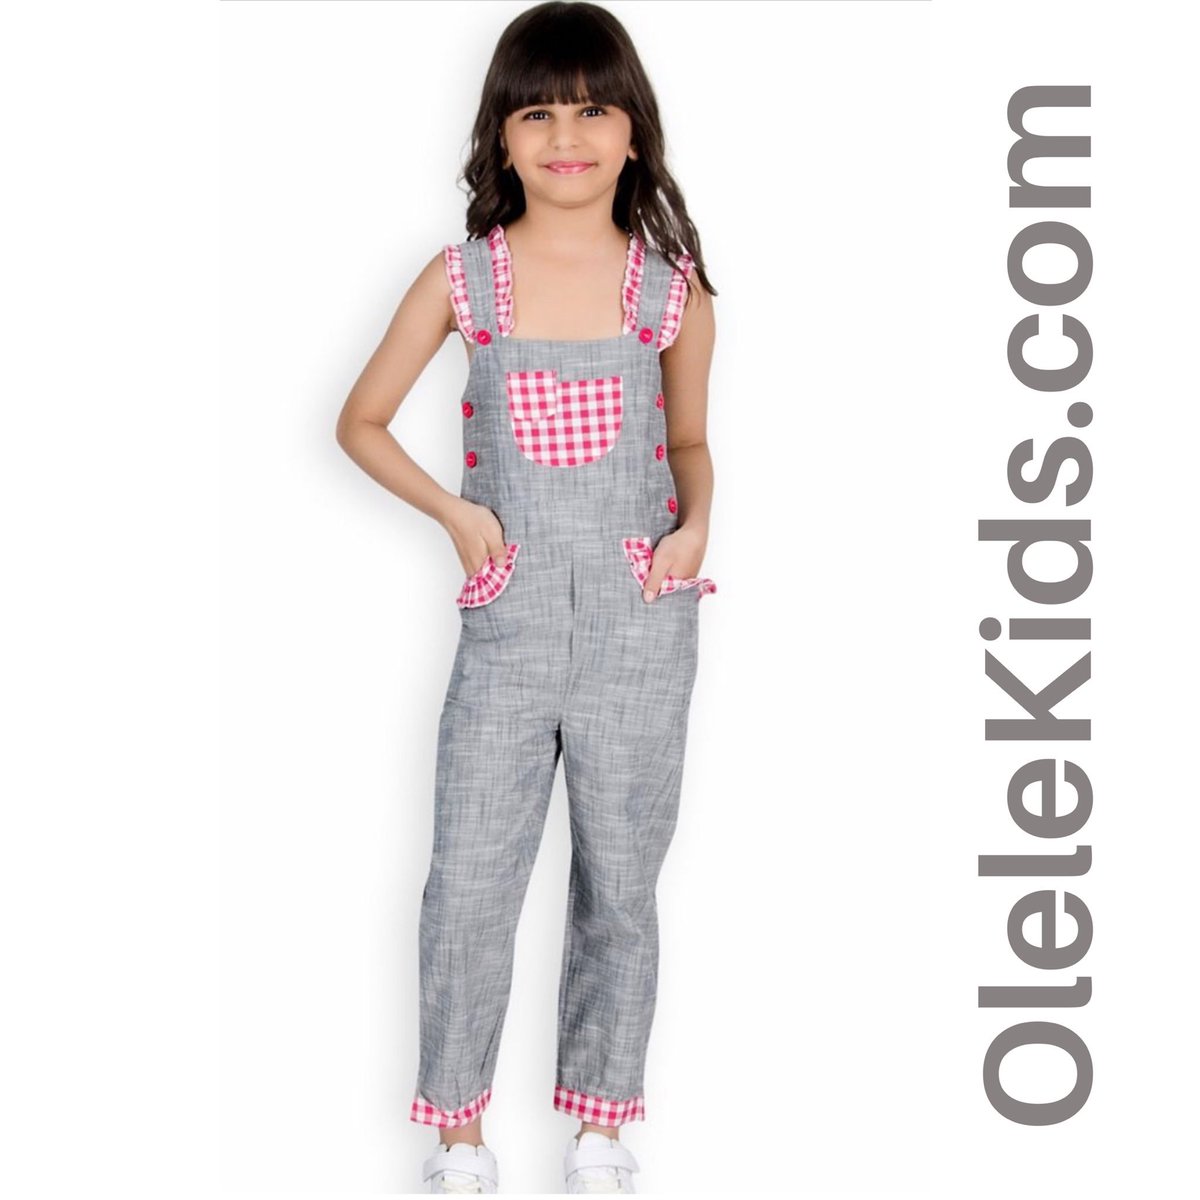 Olele Pink & Grey Girls Jumpsuit 

🛒 Buy Online : OleleKids.com
———————————————
#olelekids #olelejumpsuits #olelekidsclothing #kidsjumpsuit #girlsjumpsuit #kidsfashion #kidstyle #kidsoverall #kidswearmagazine #kidswearbrand #kidsclothes #kidsfashionblogger